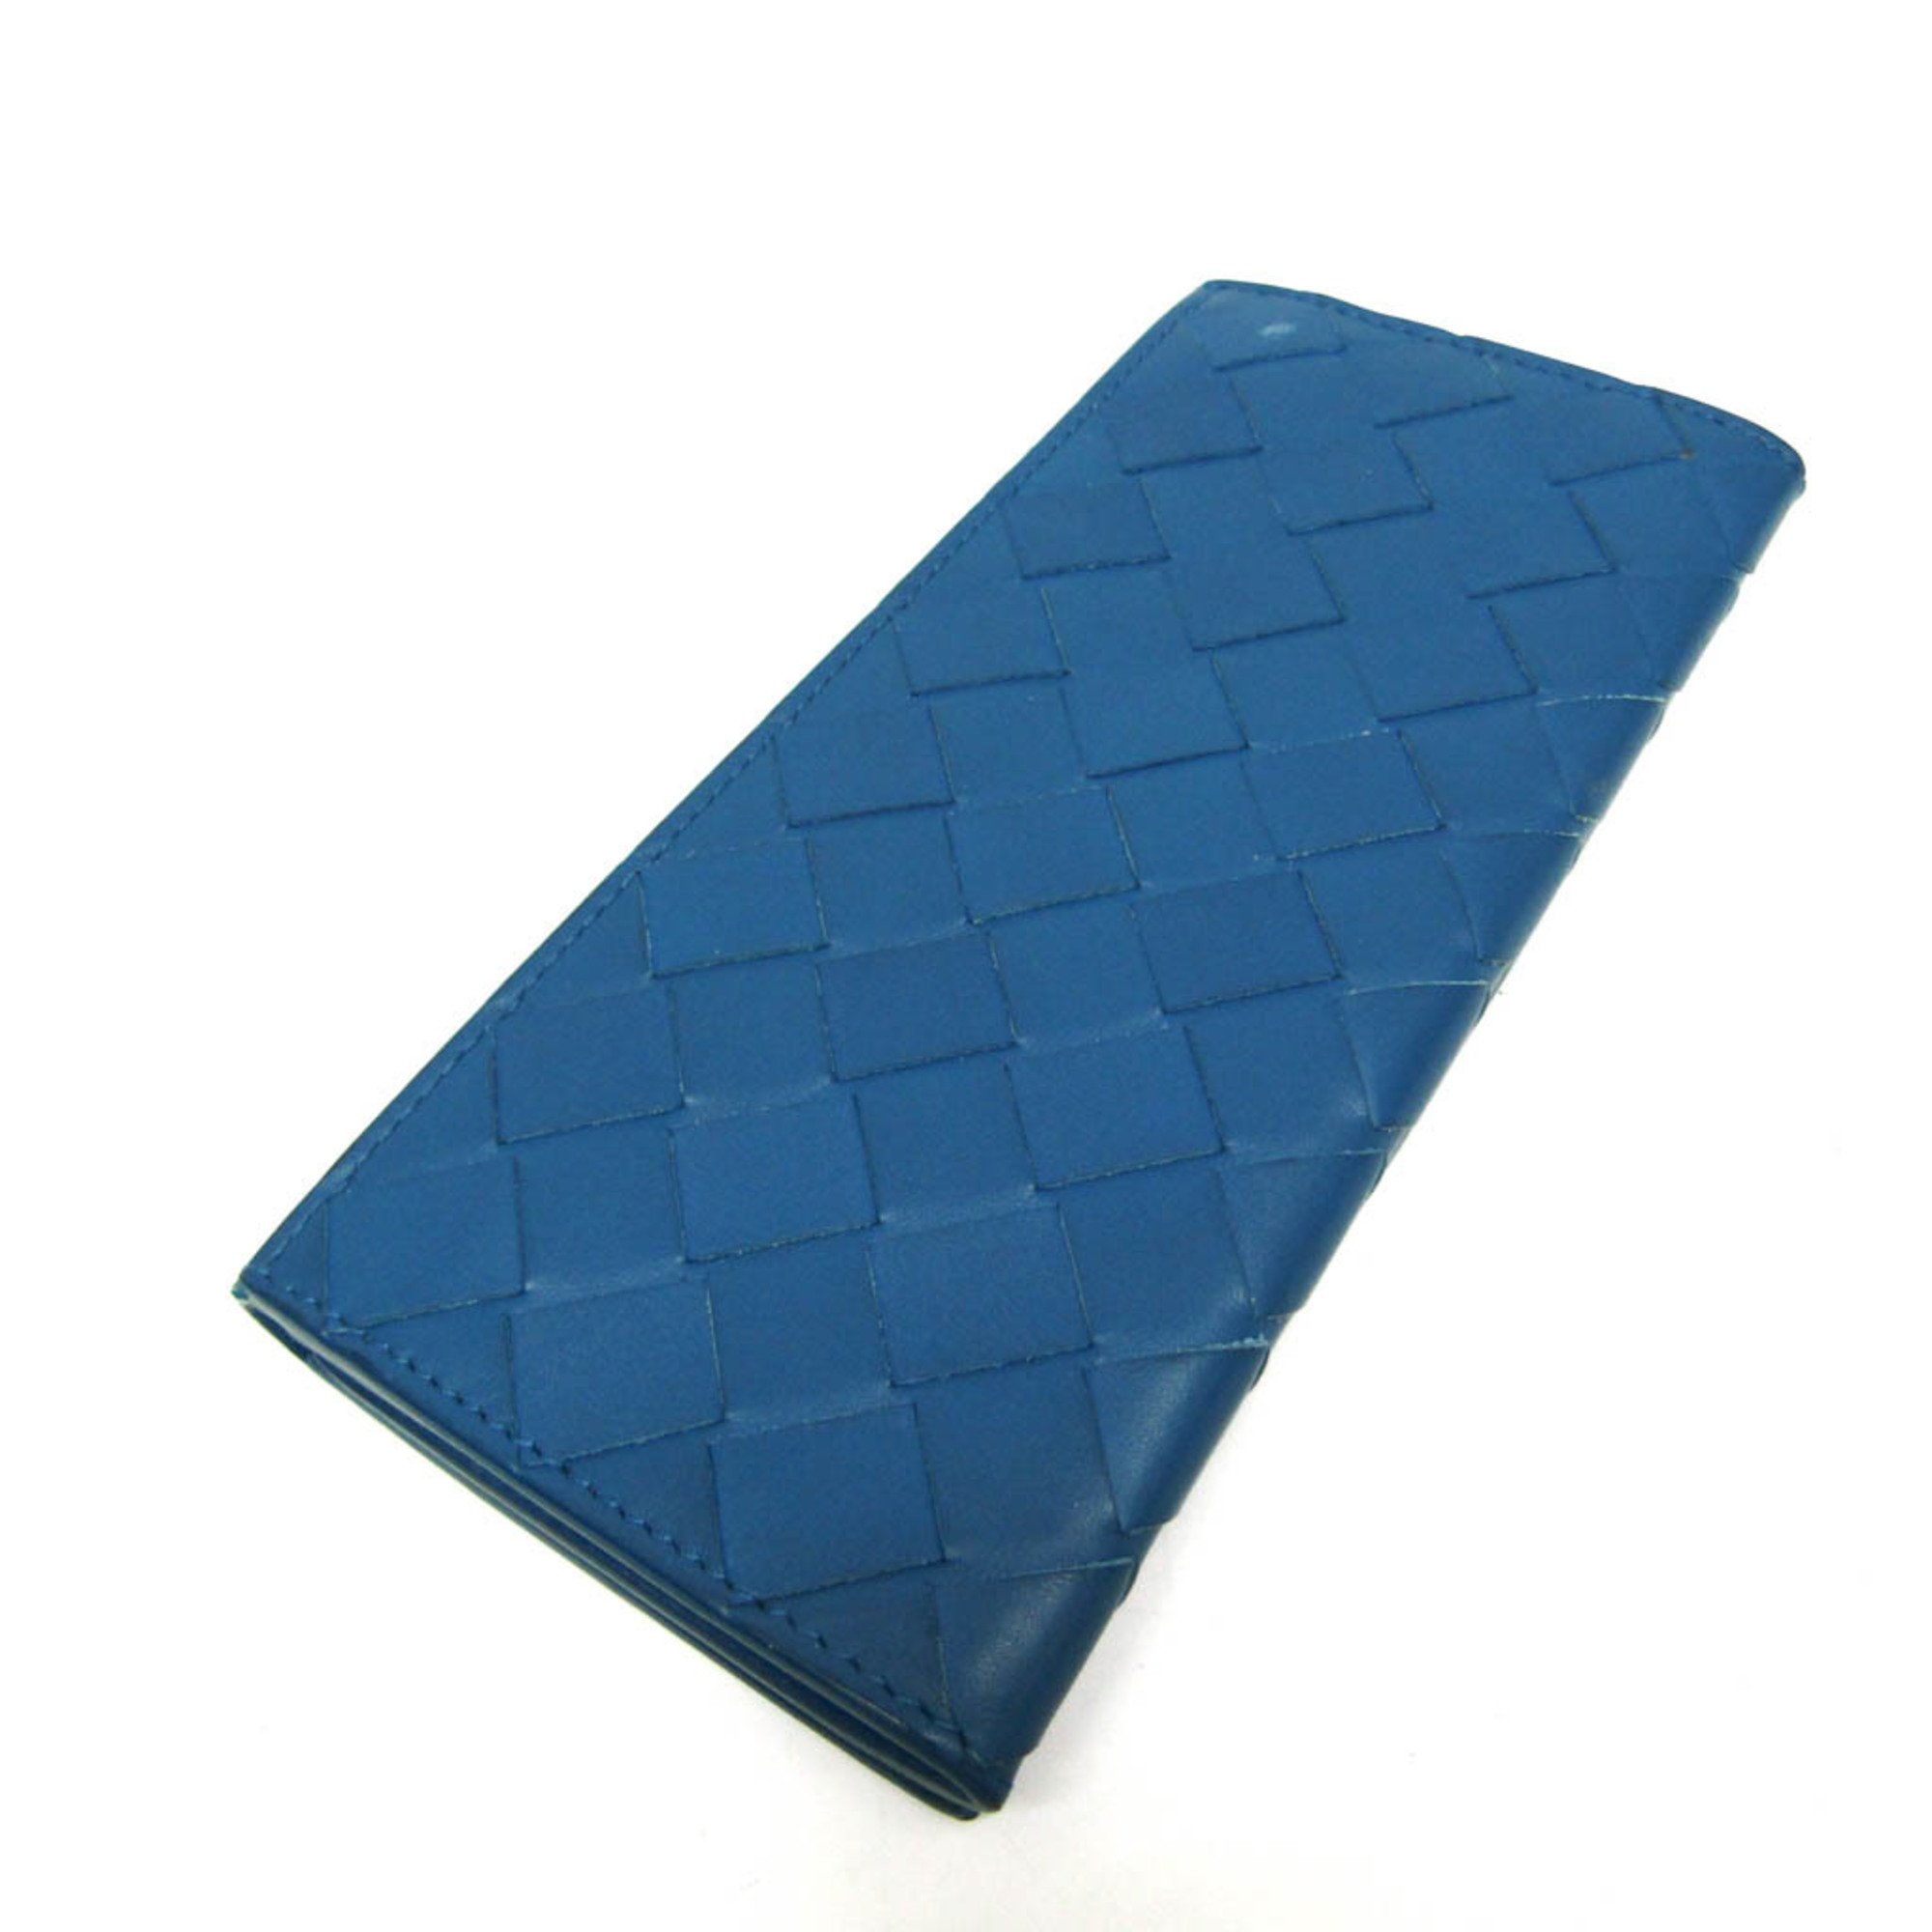 Bottega Veneta Intrecciato Unisex Leather Long Bill Wallet (bi-fold) Blue